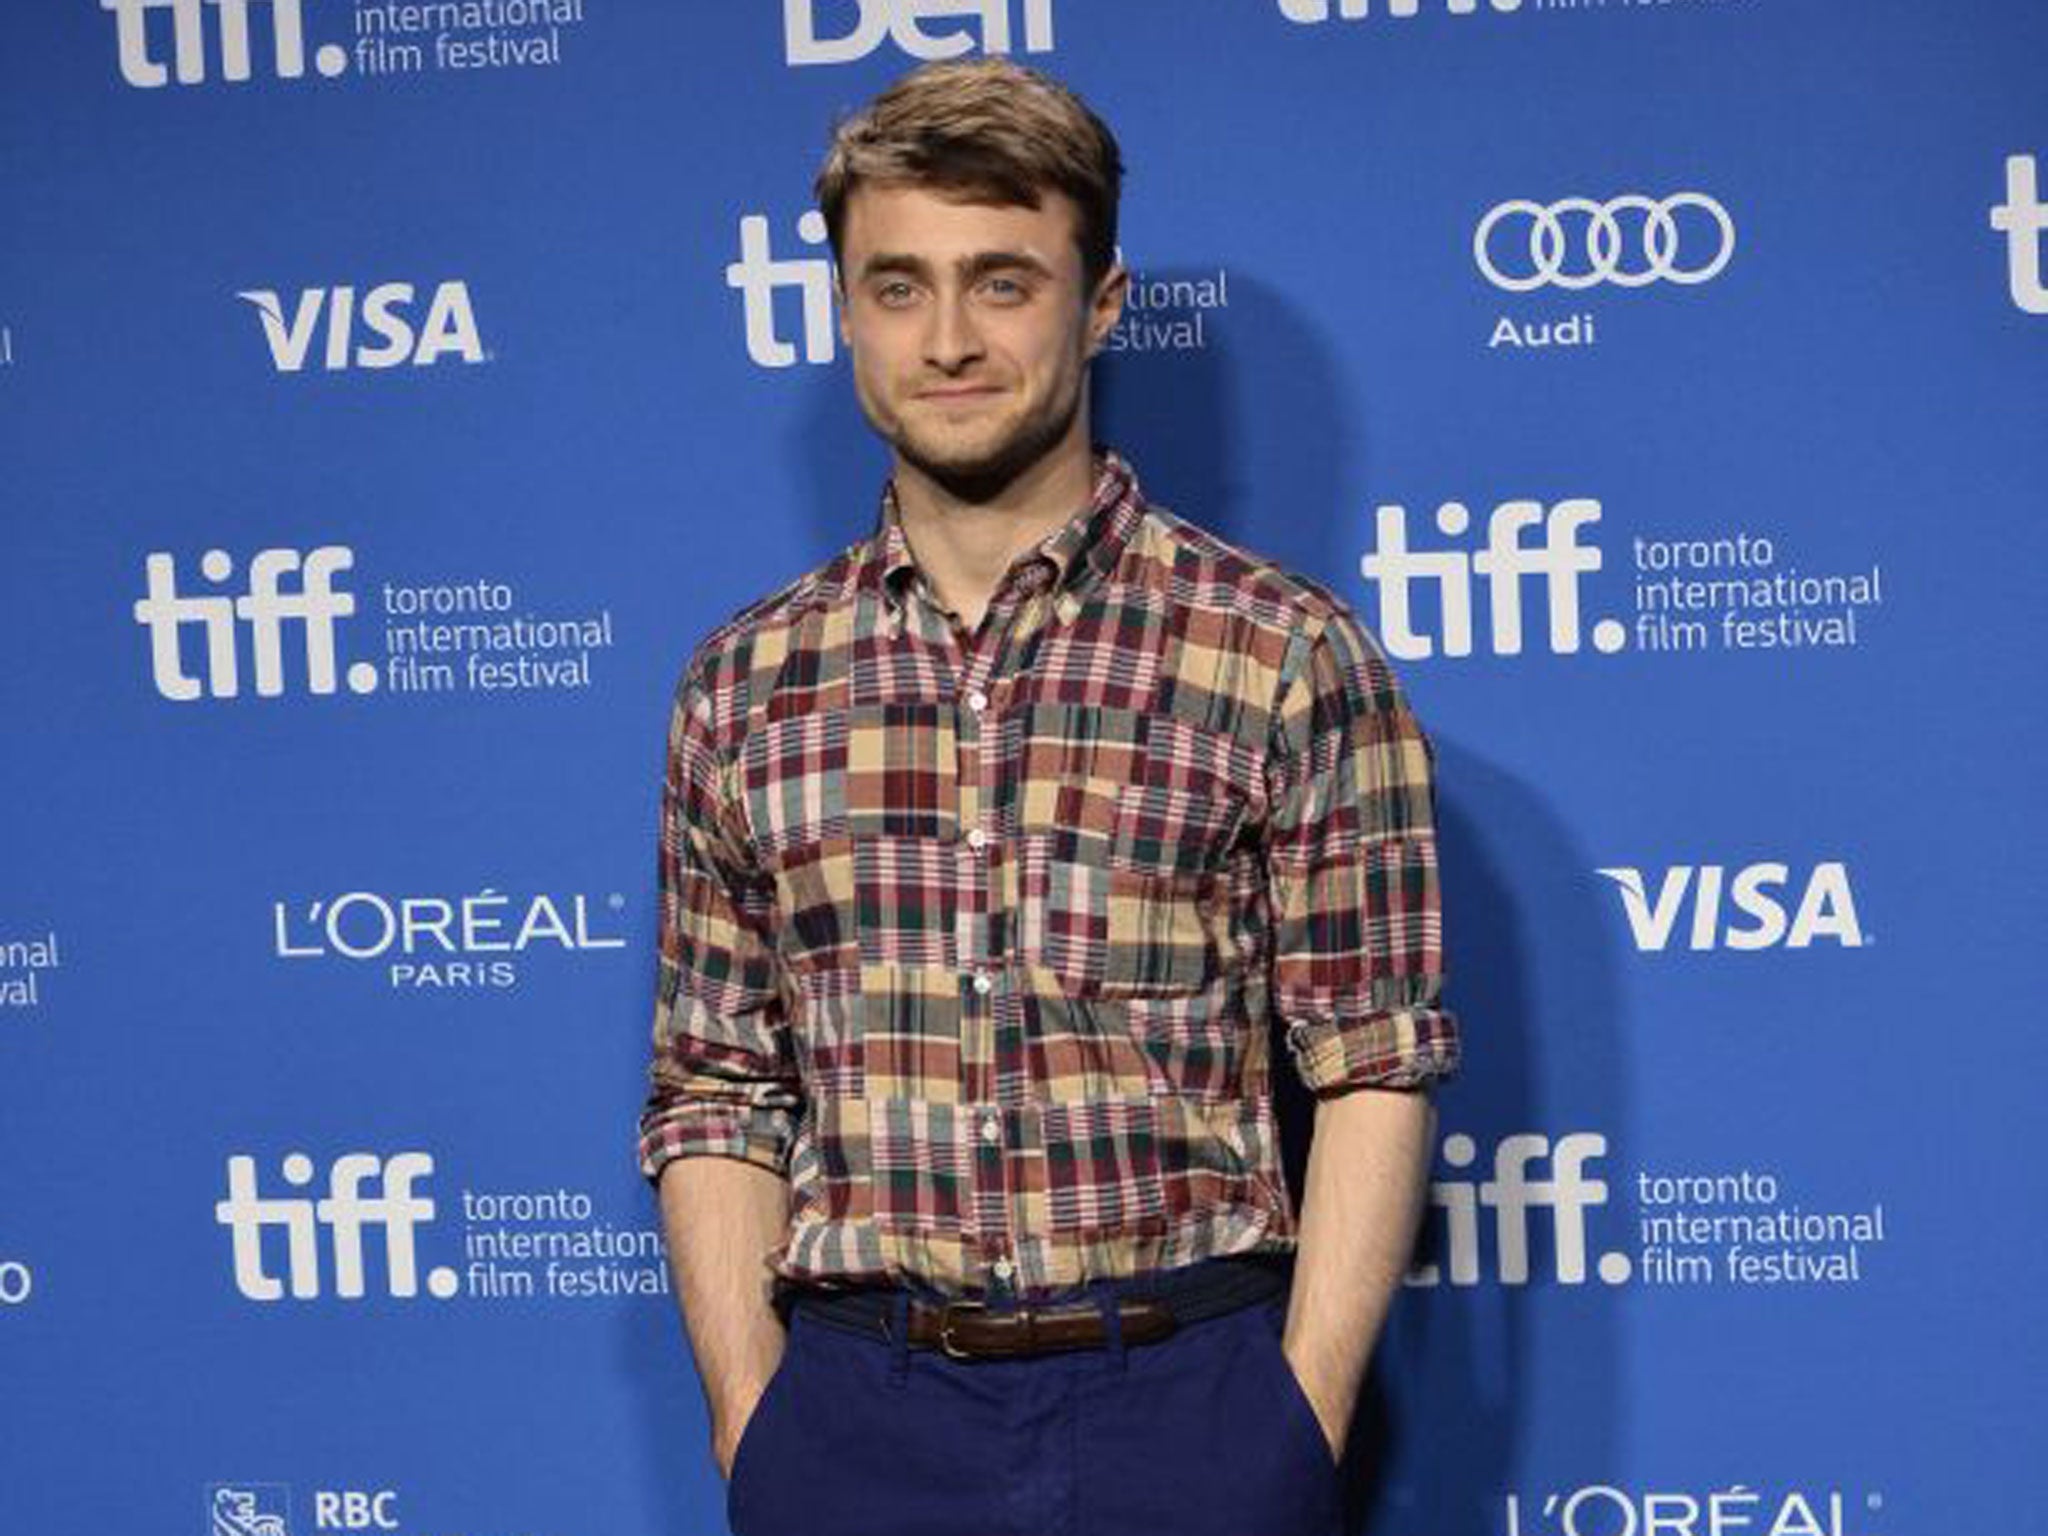 Daniel Radcliffe, Actor